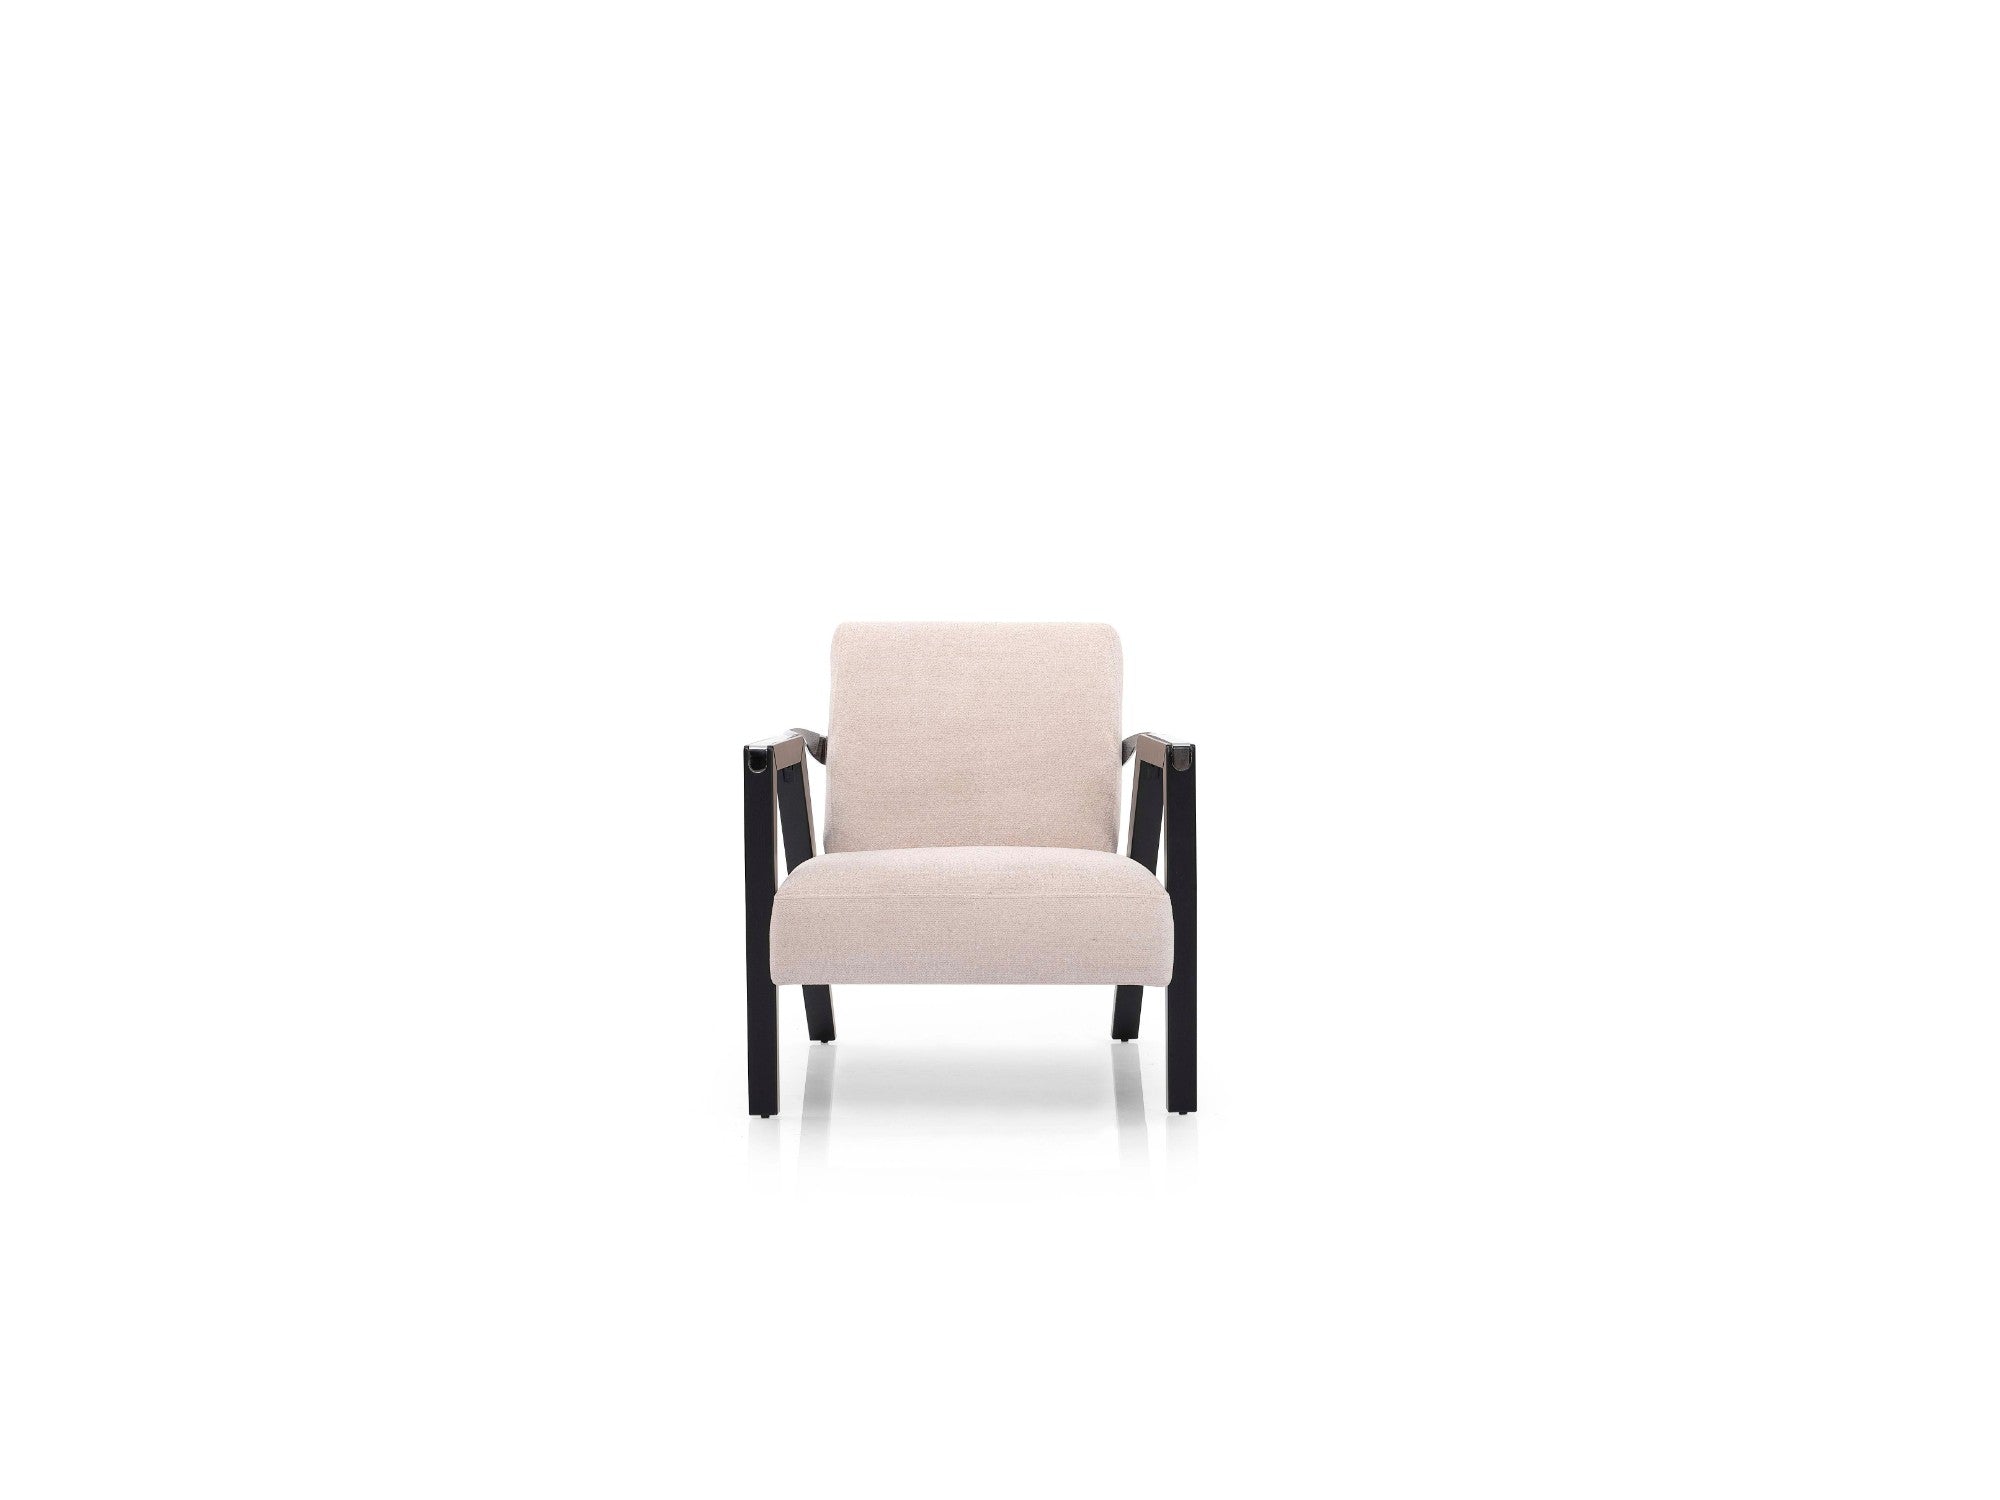 Lucca Convertible Livingroom Set (2 Sofa & 2 Chair)